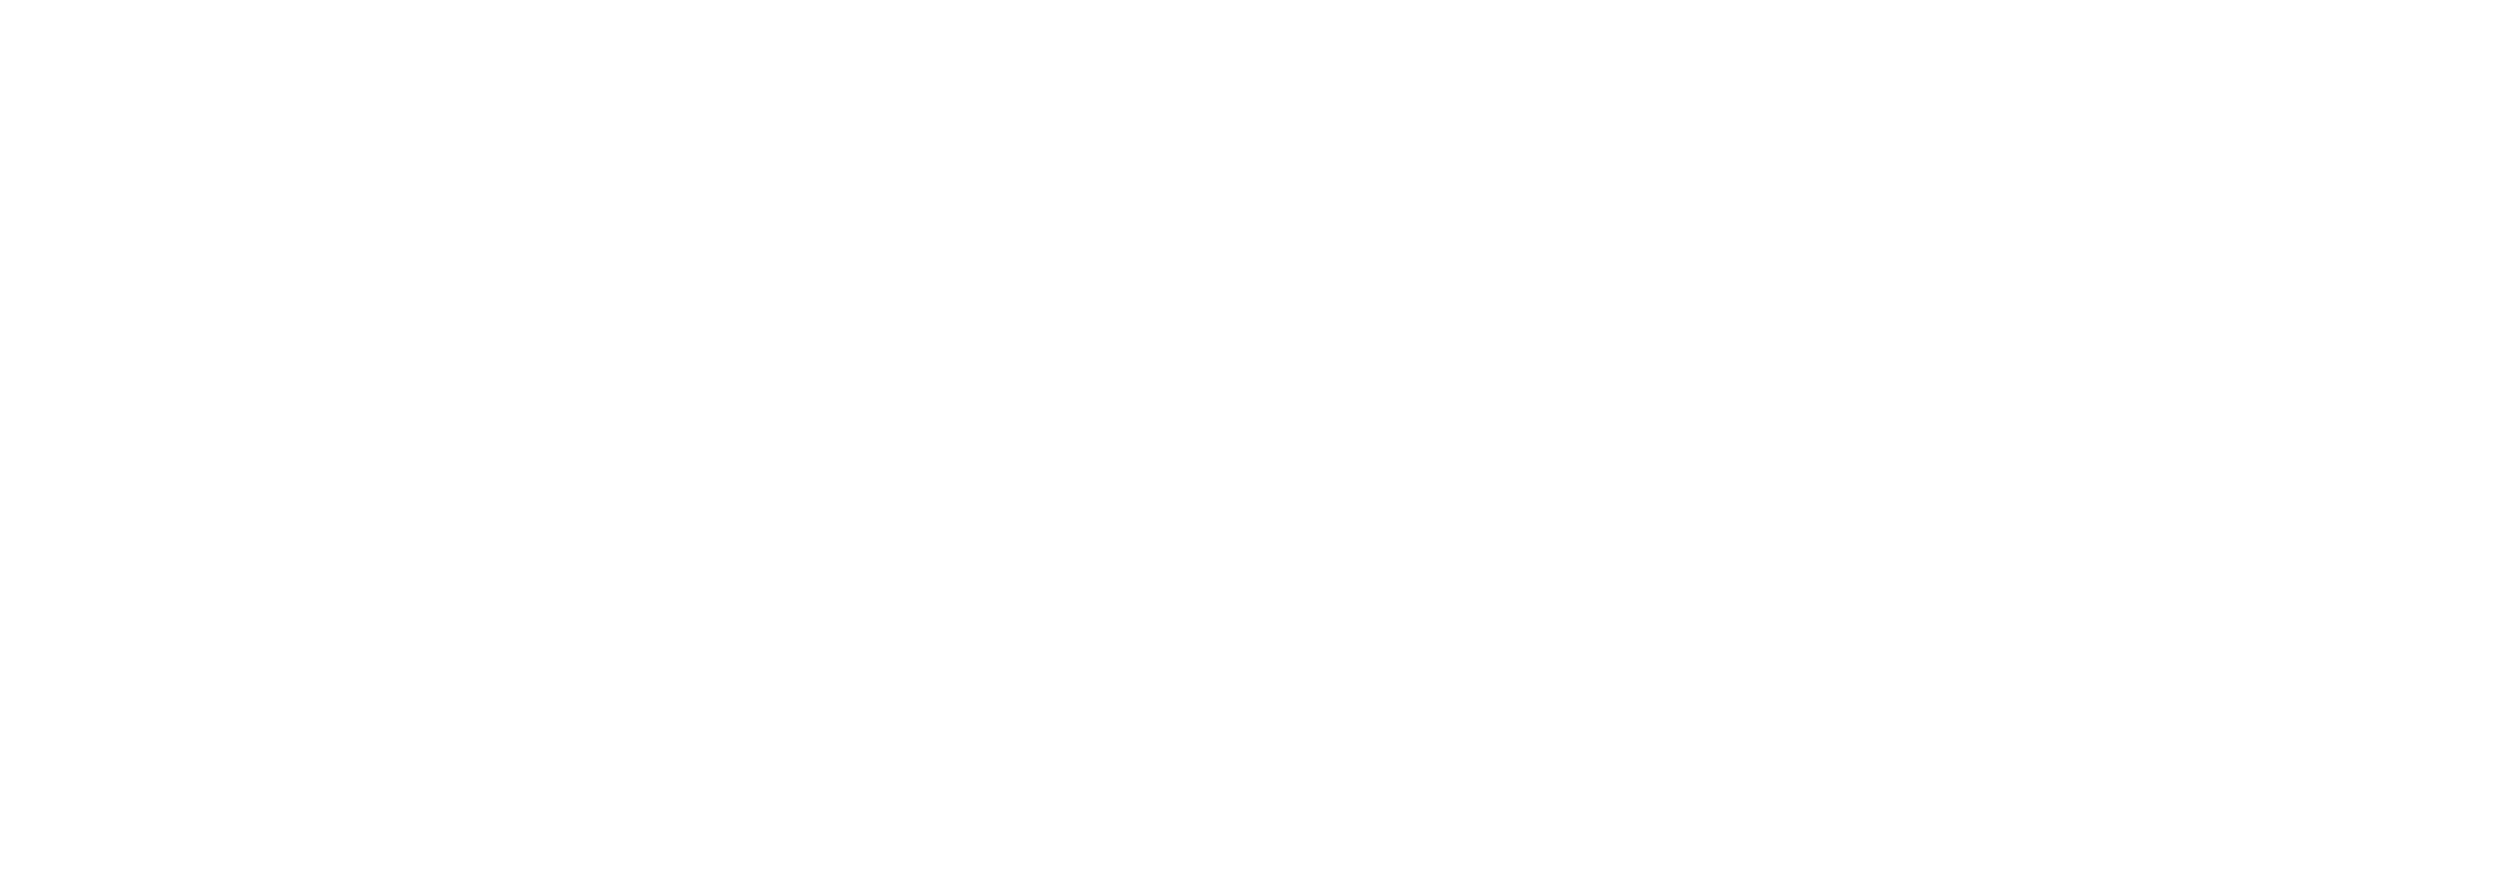 WebGhat Logo